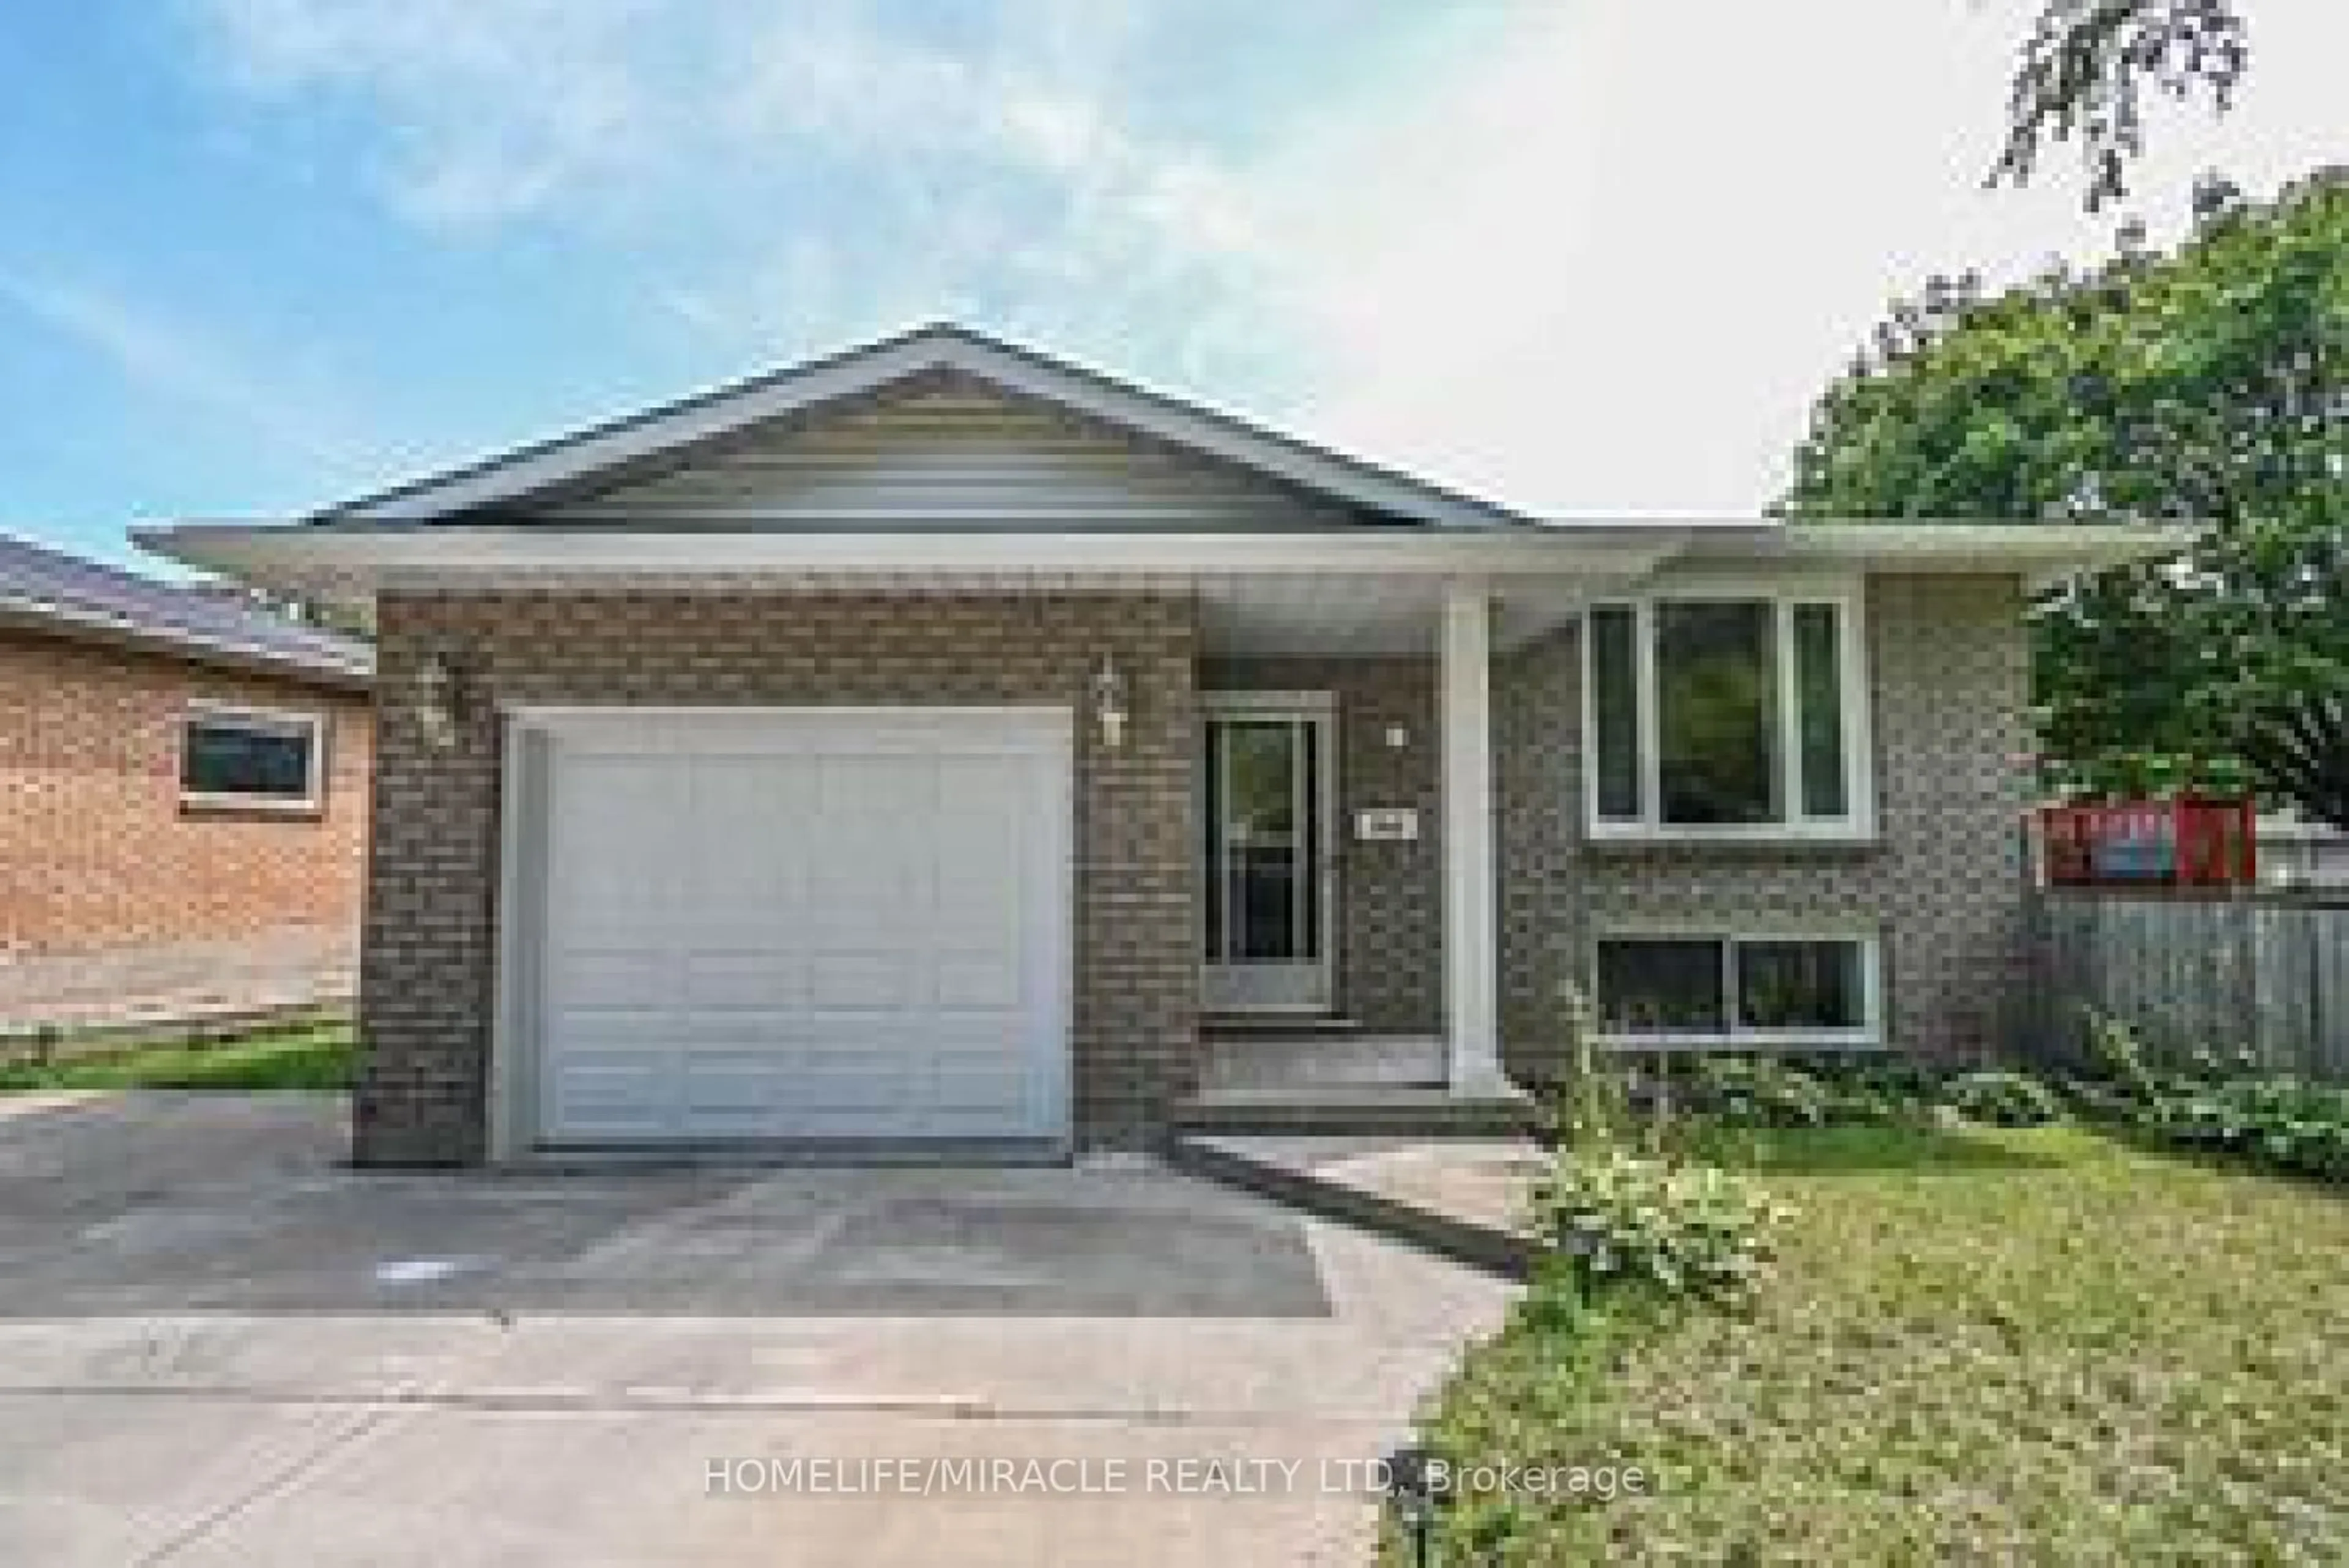 Home with brick exterior material for 7760 Cavendish Dr, Niagara Falls Ontario L2M 2T8